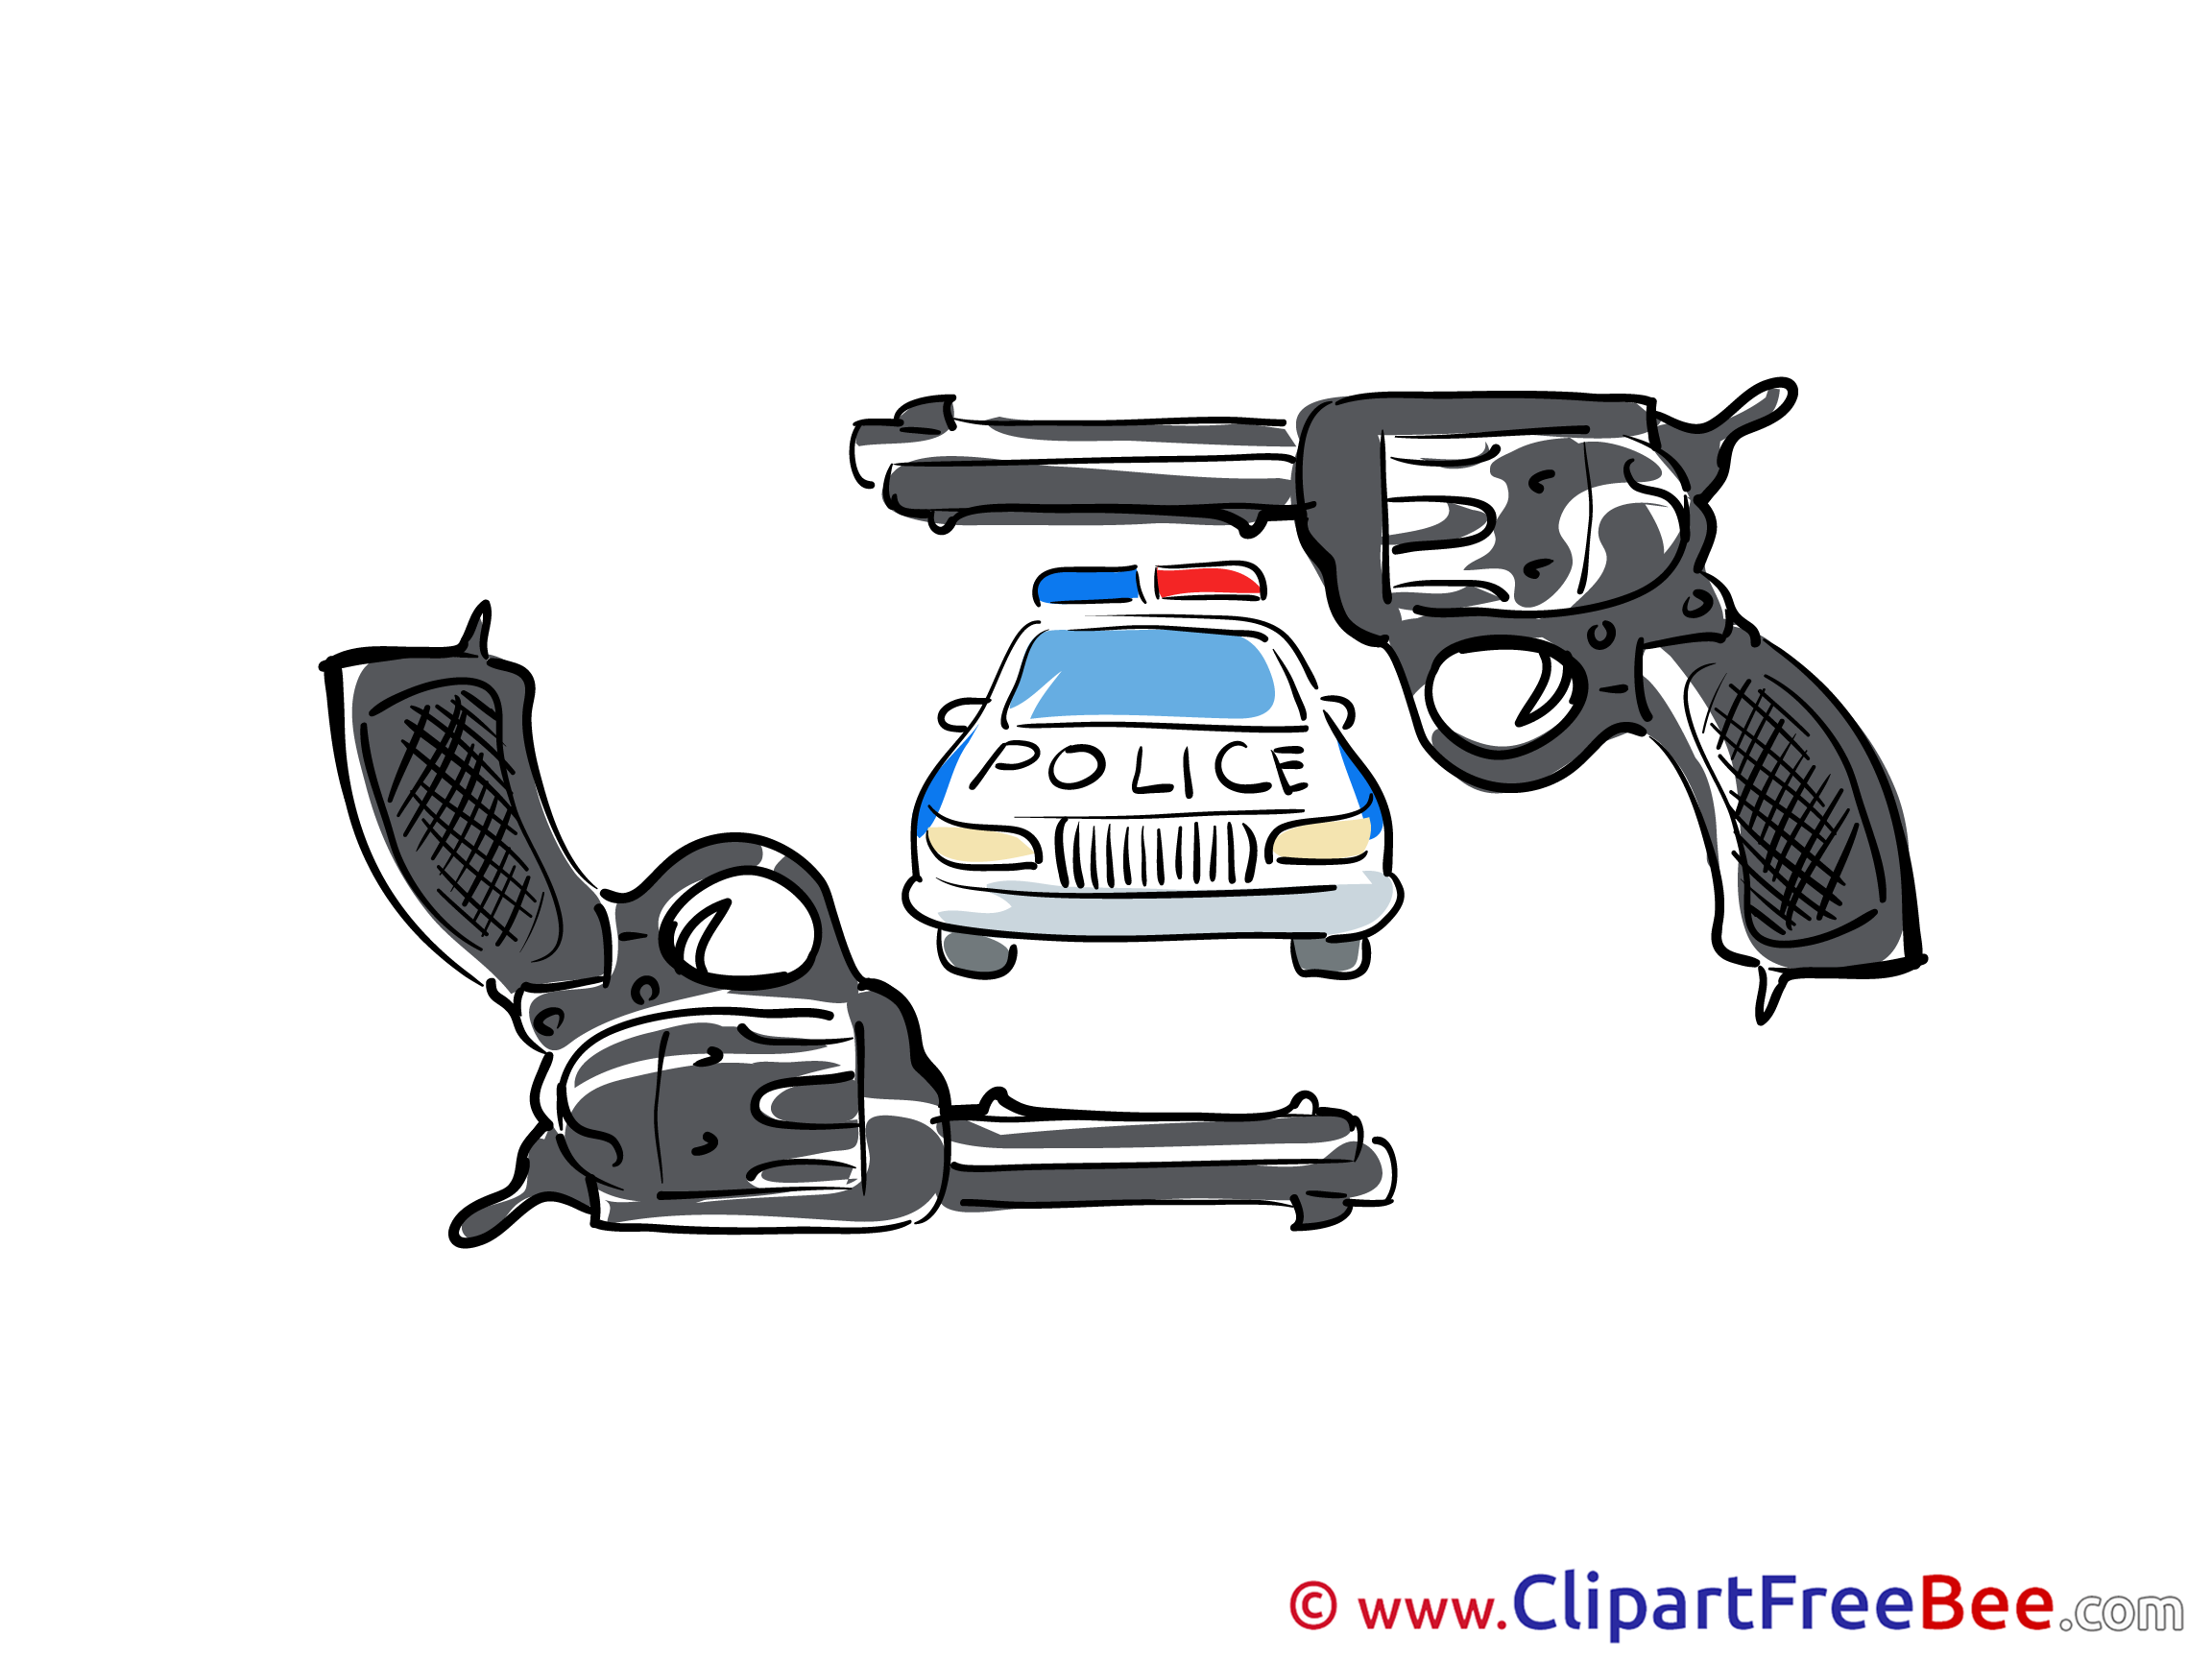 Pistols Police Car Pics free download Image